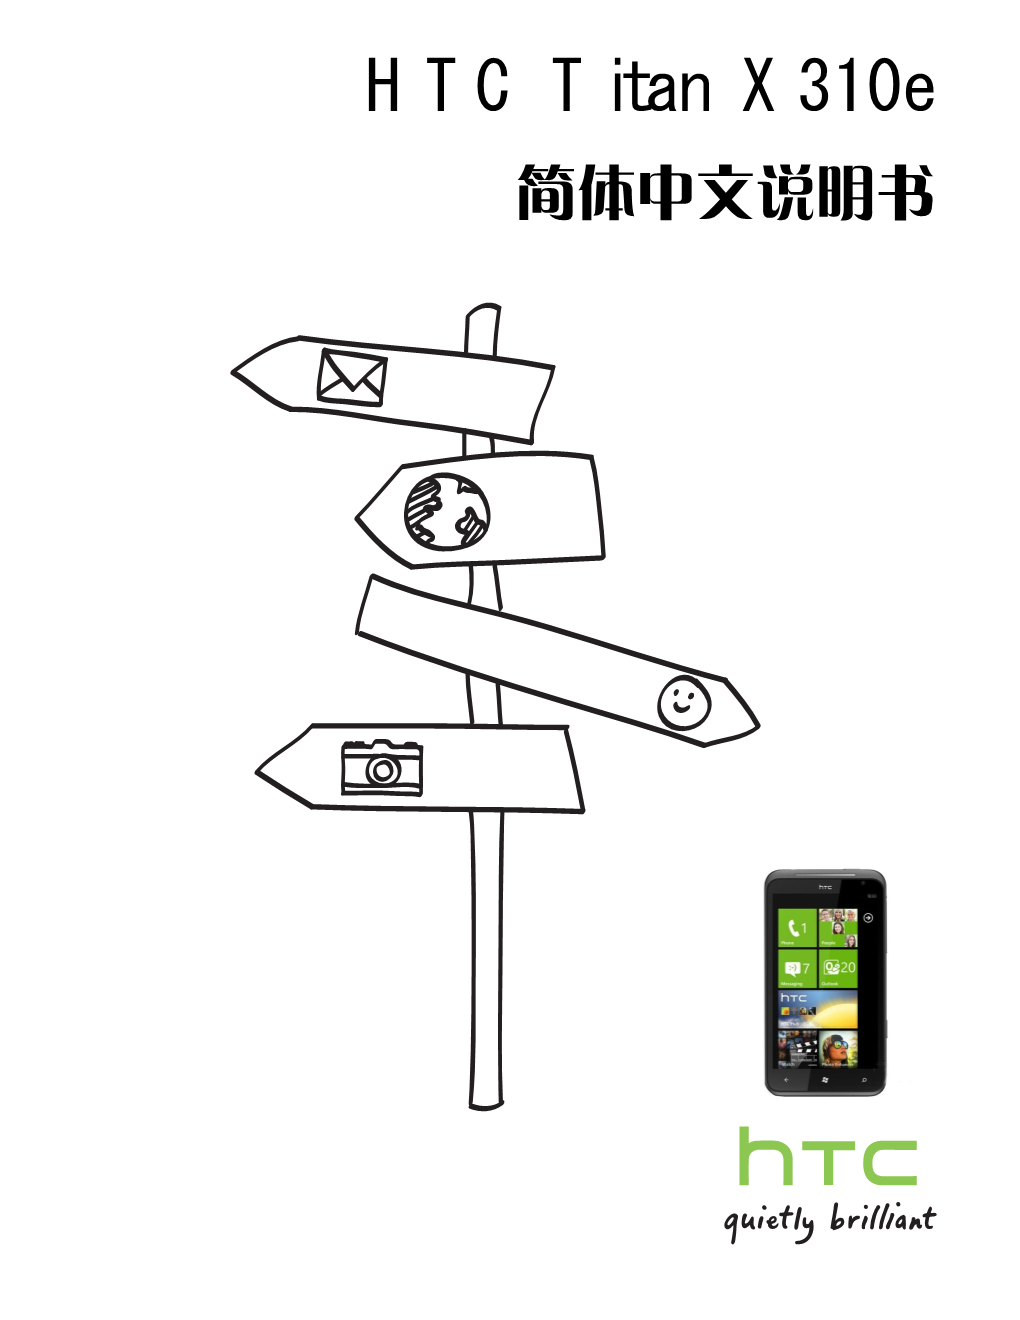 HTC Titan X310e 简体中文说明书 2 内容